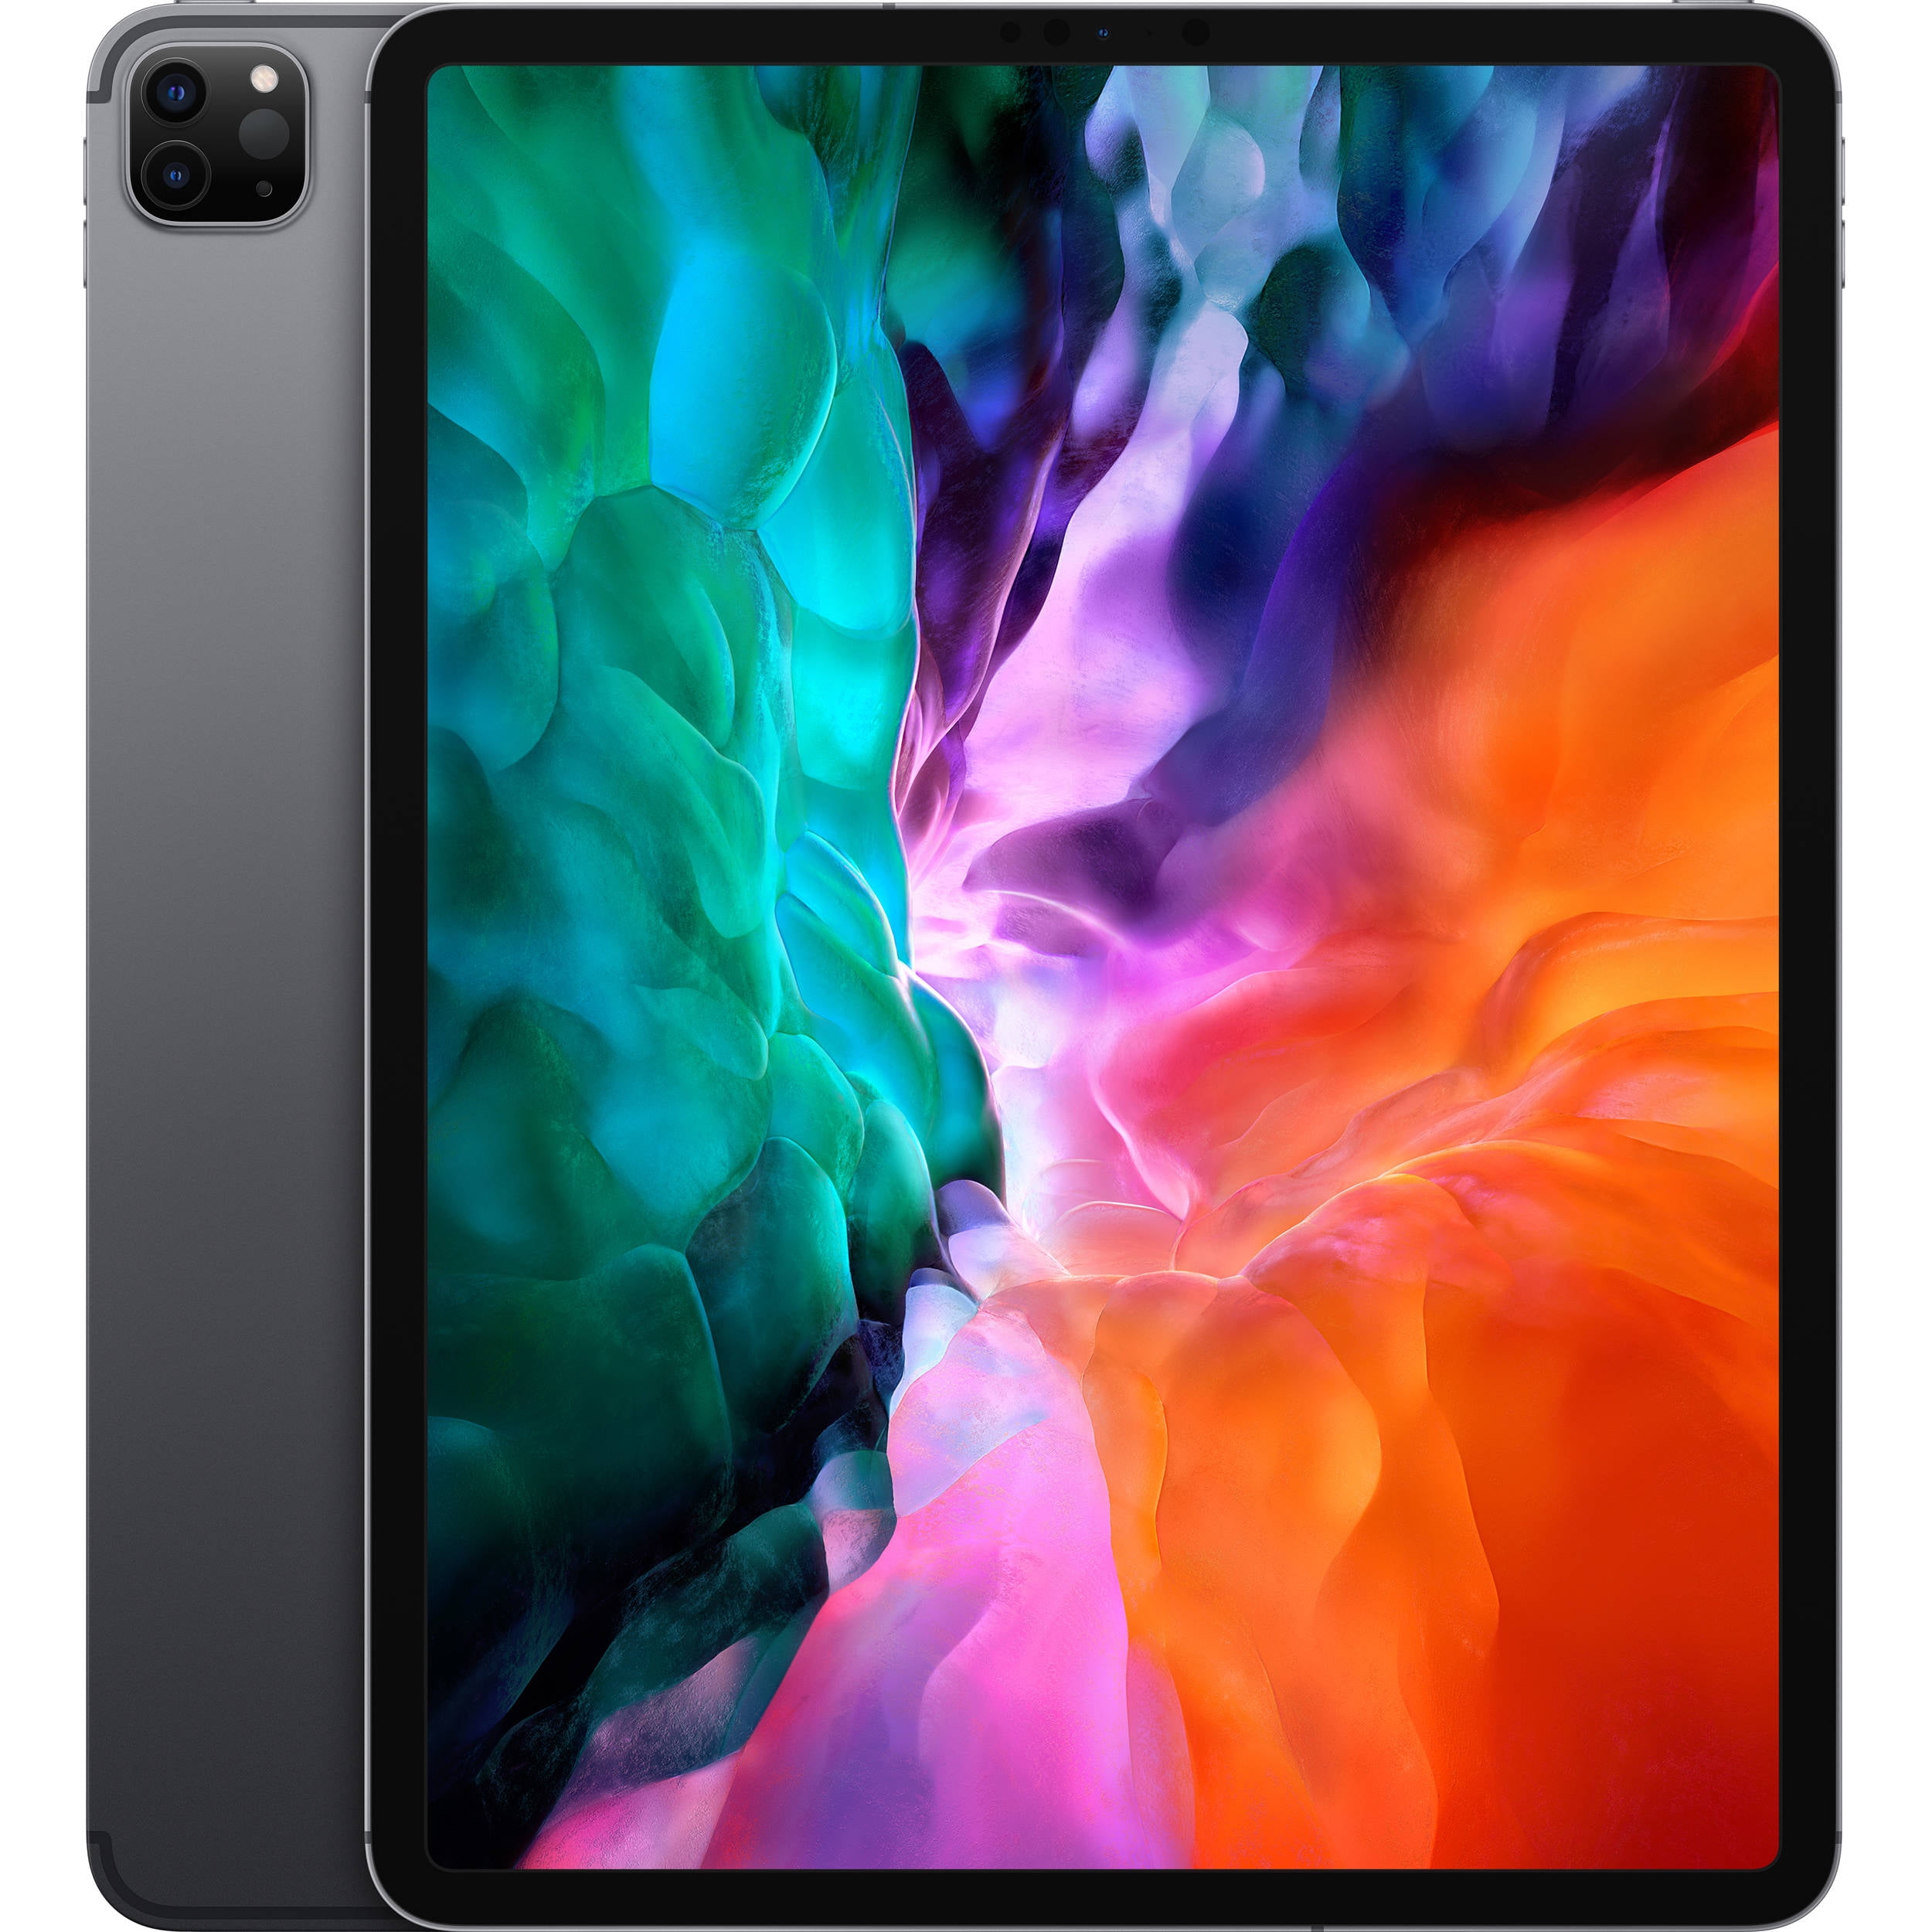 Apple iPad Pro 12.9 inch 4th Gen Wi-Fi + Cellular 256GB - Space Grey - iPad with 12.9' Retina Display, iOS 13, , 256GB Inbuilt Memory, Dual Camera